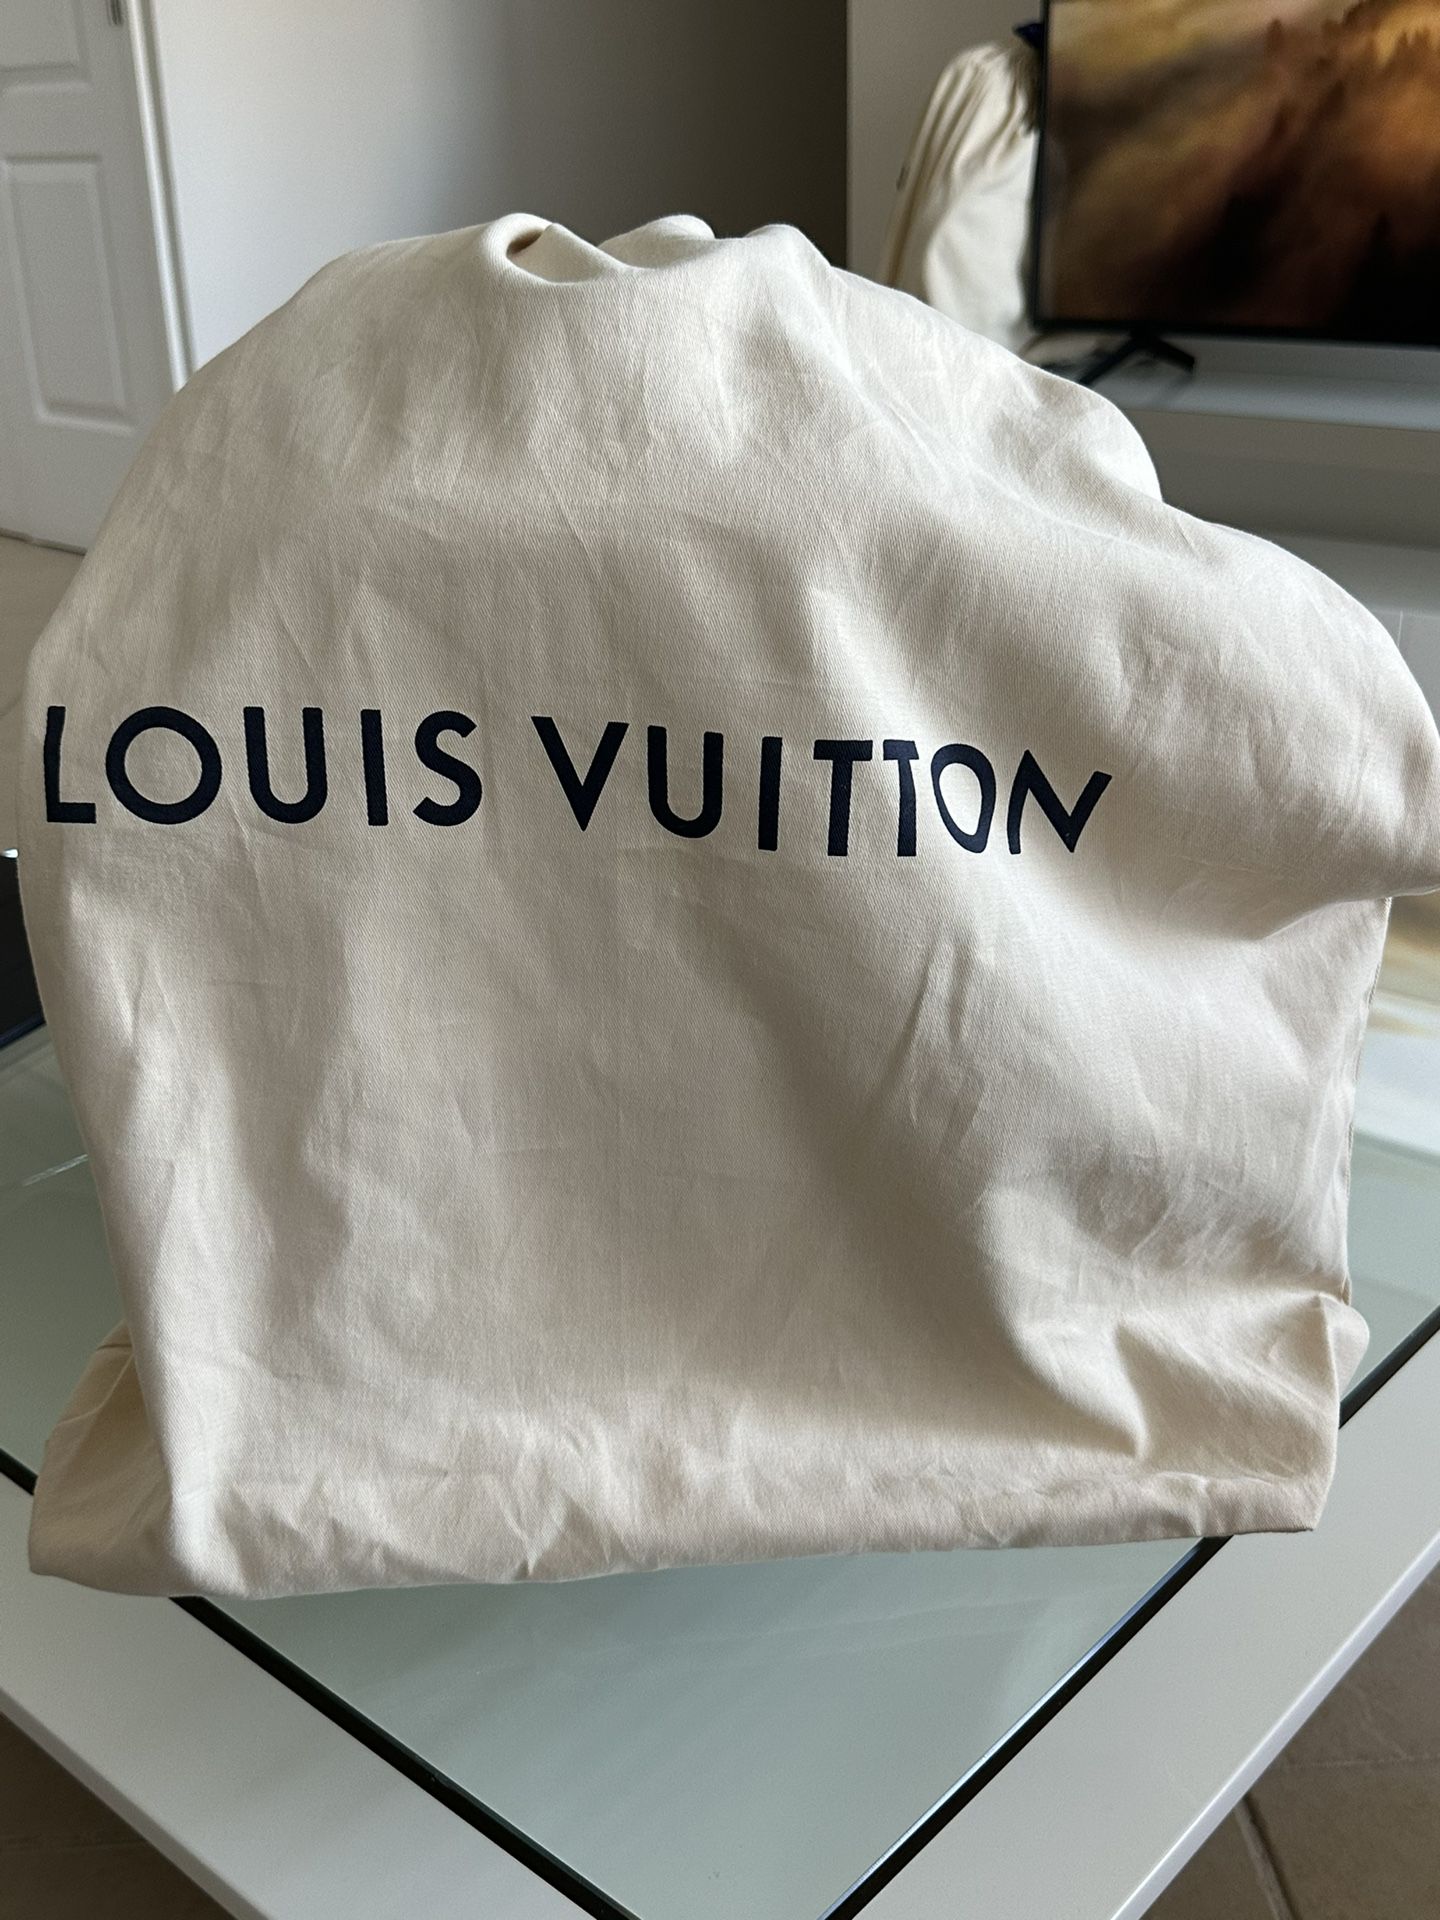 Louis Vuitton Large Drawstring Dust Bag